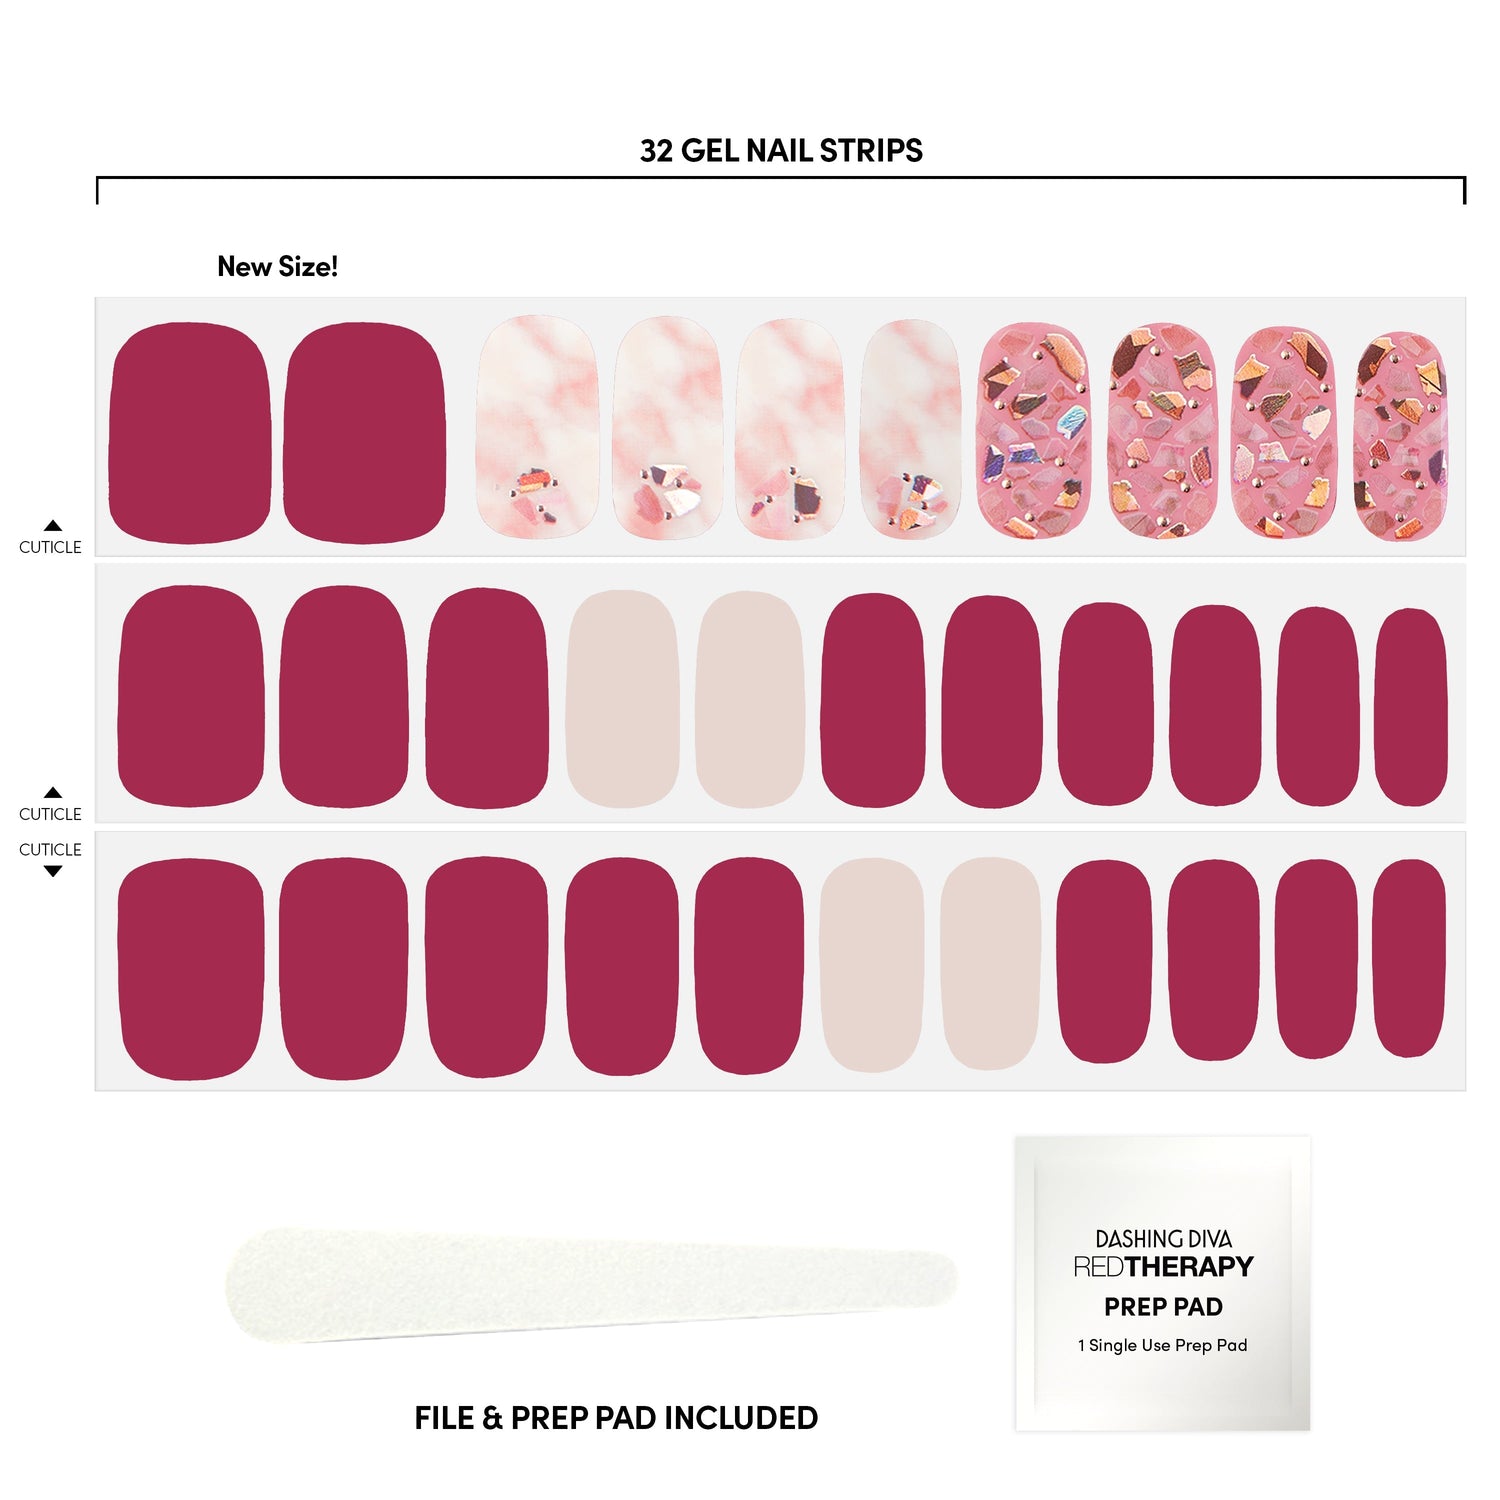  pink gel nail strips, NAIL FILE, RED THERAPY PREP PAD